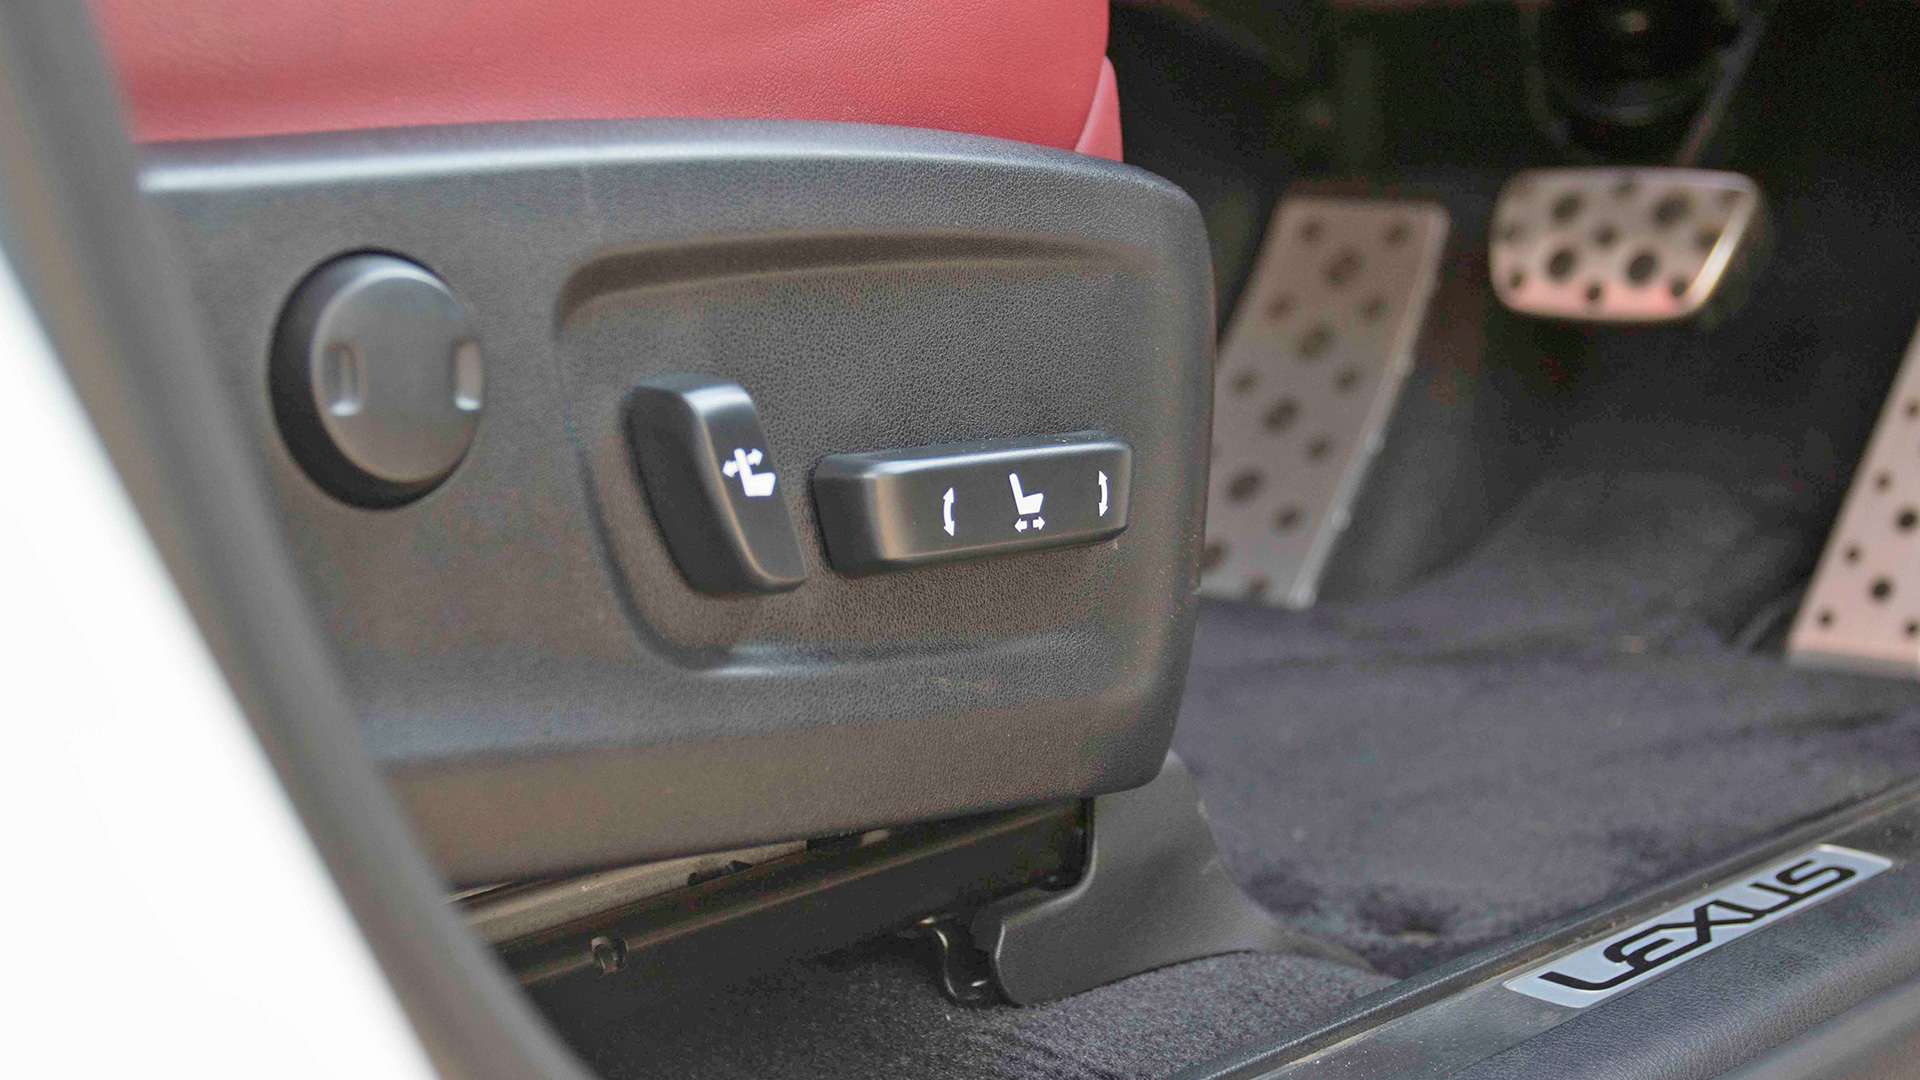 Lexus RX 450h 2017 STD Interior